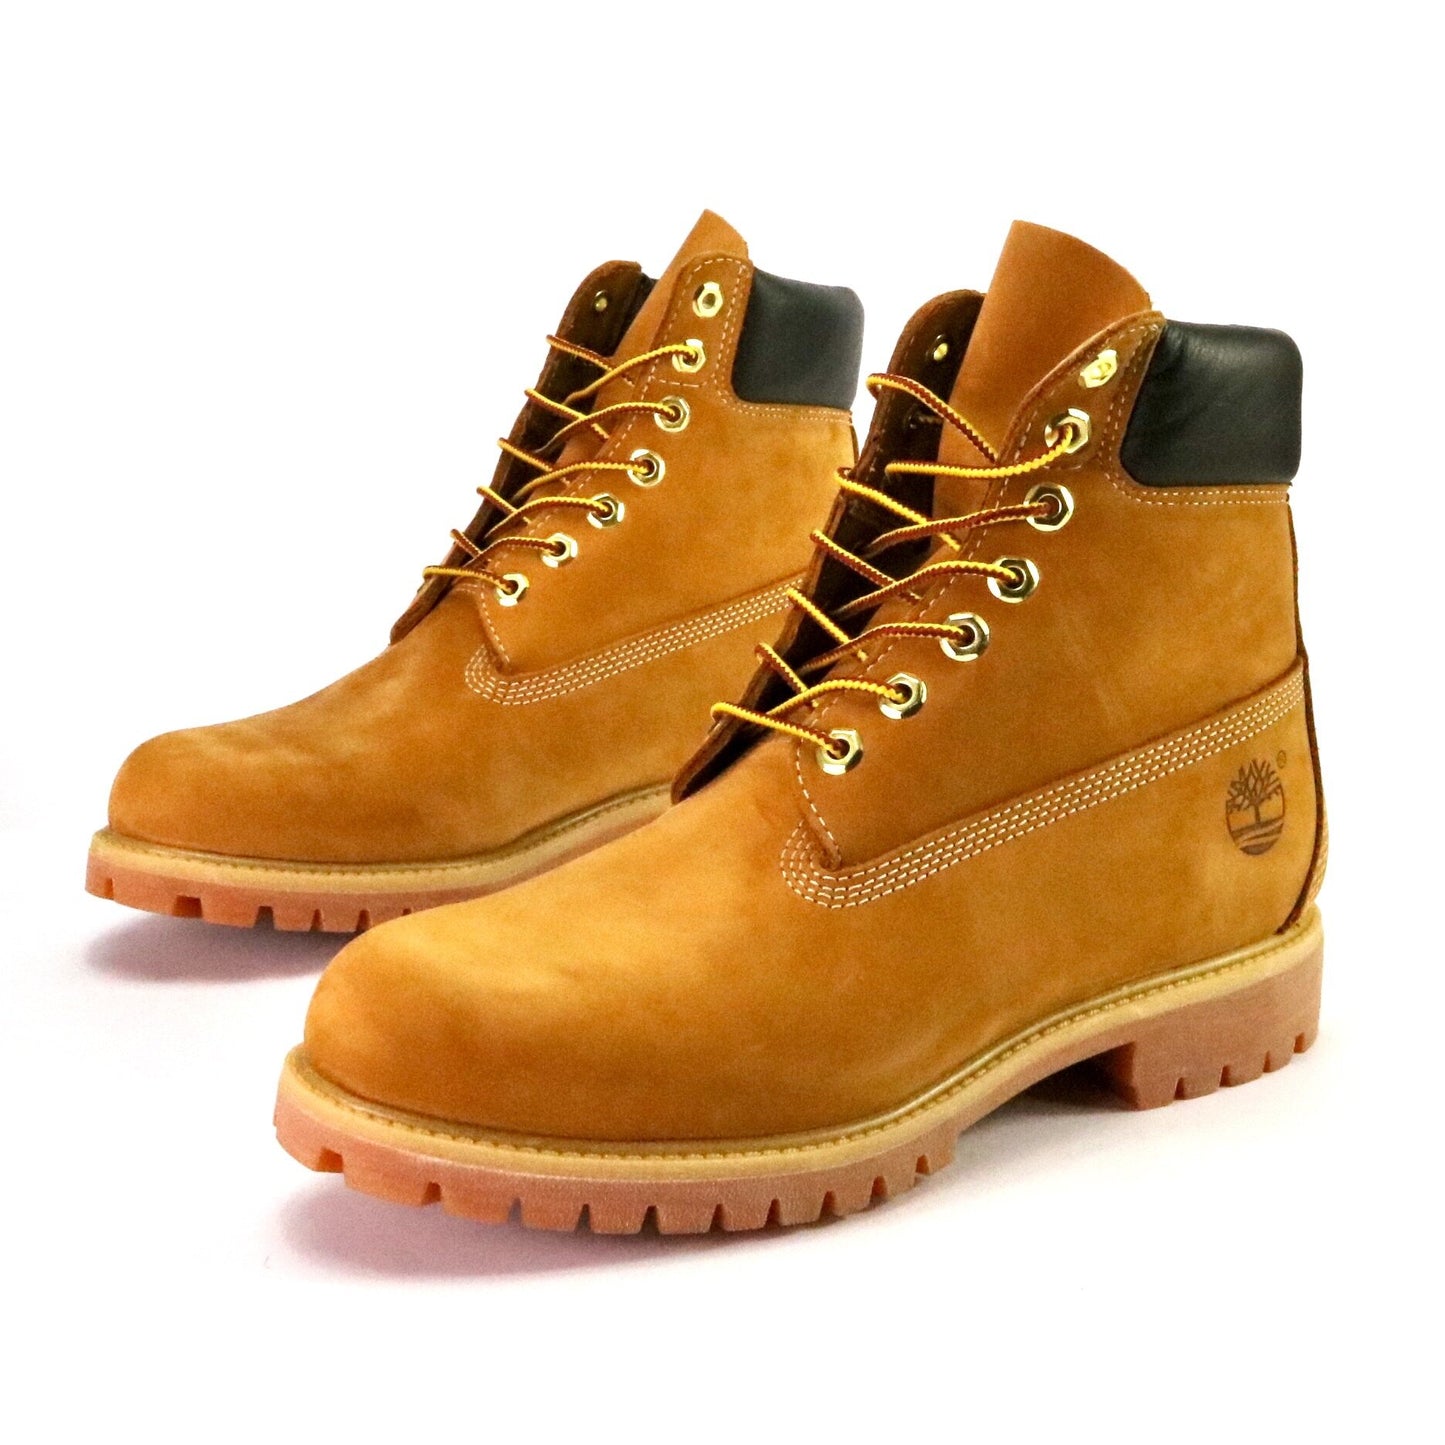 Timberland Men's 6 Inch Premium Waterproof Boots Wheat